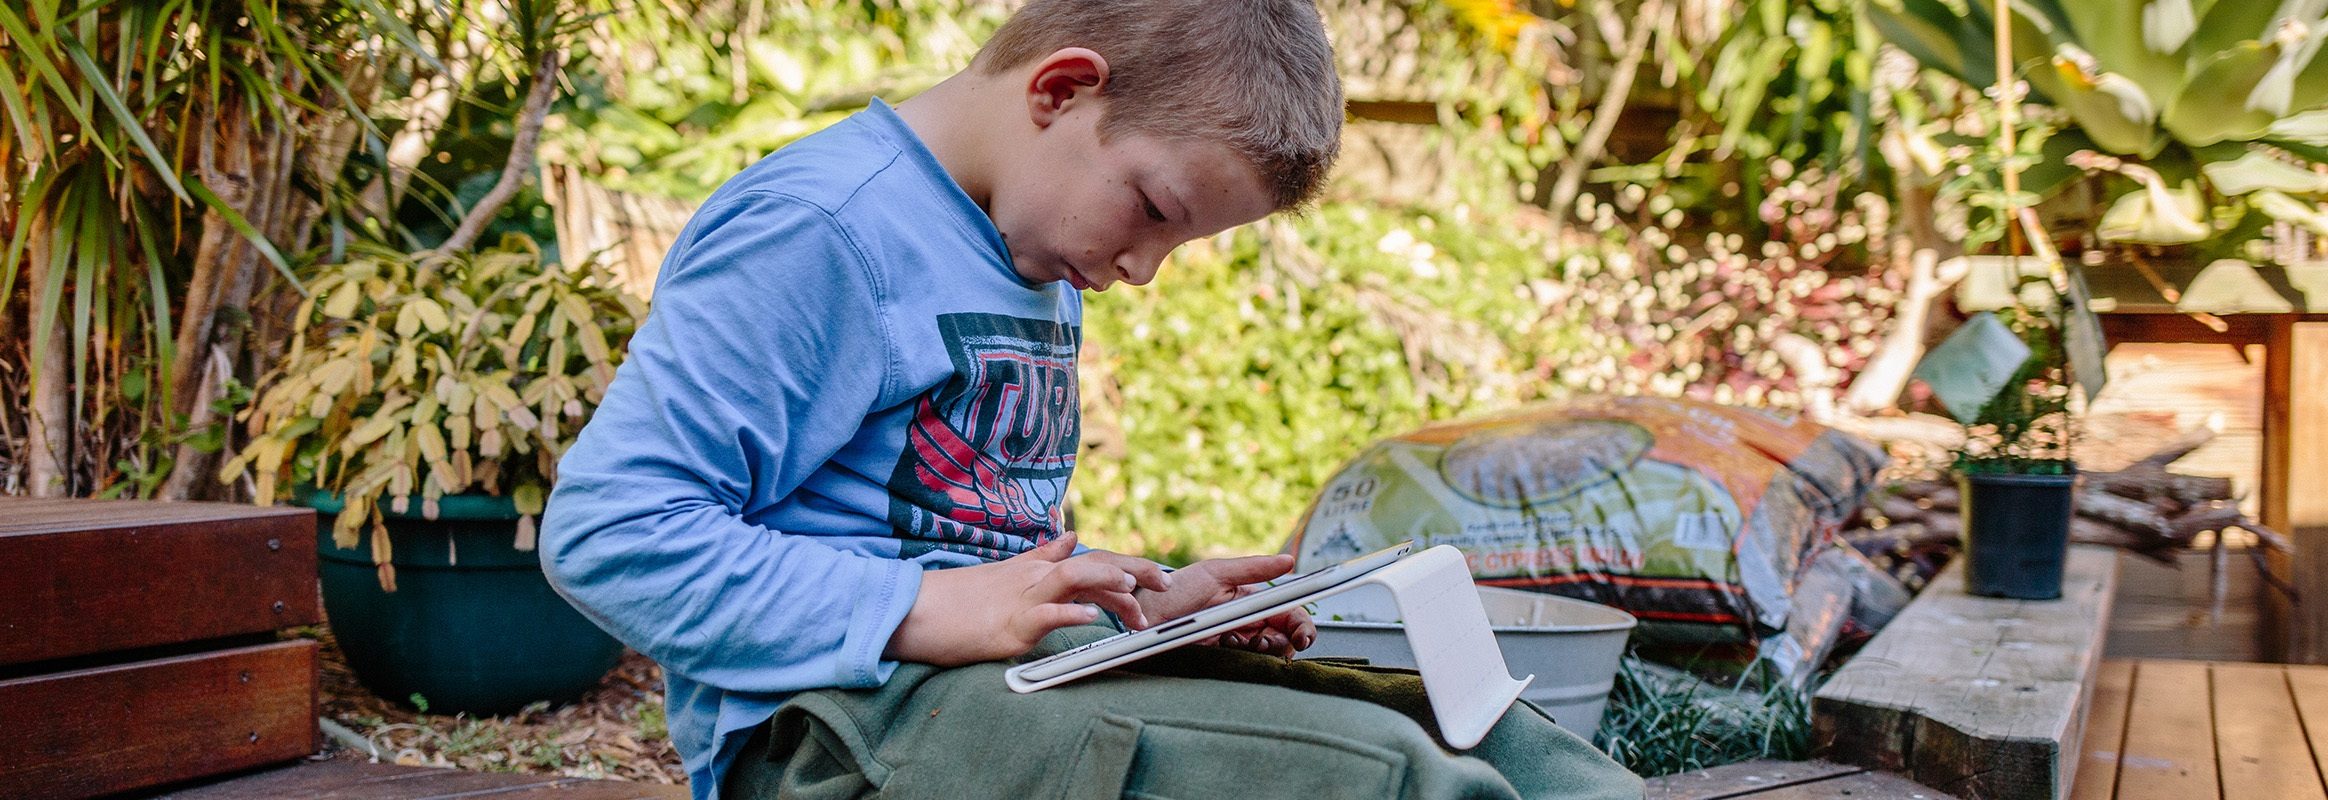 Boy in garden with iPad